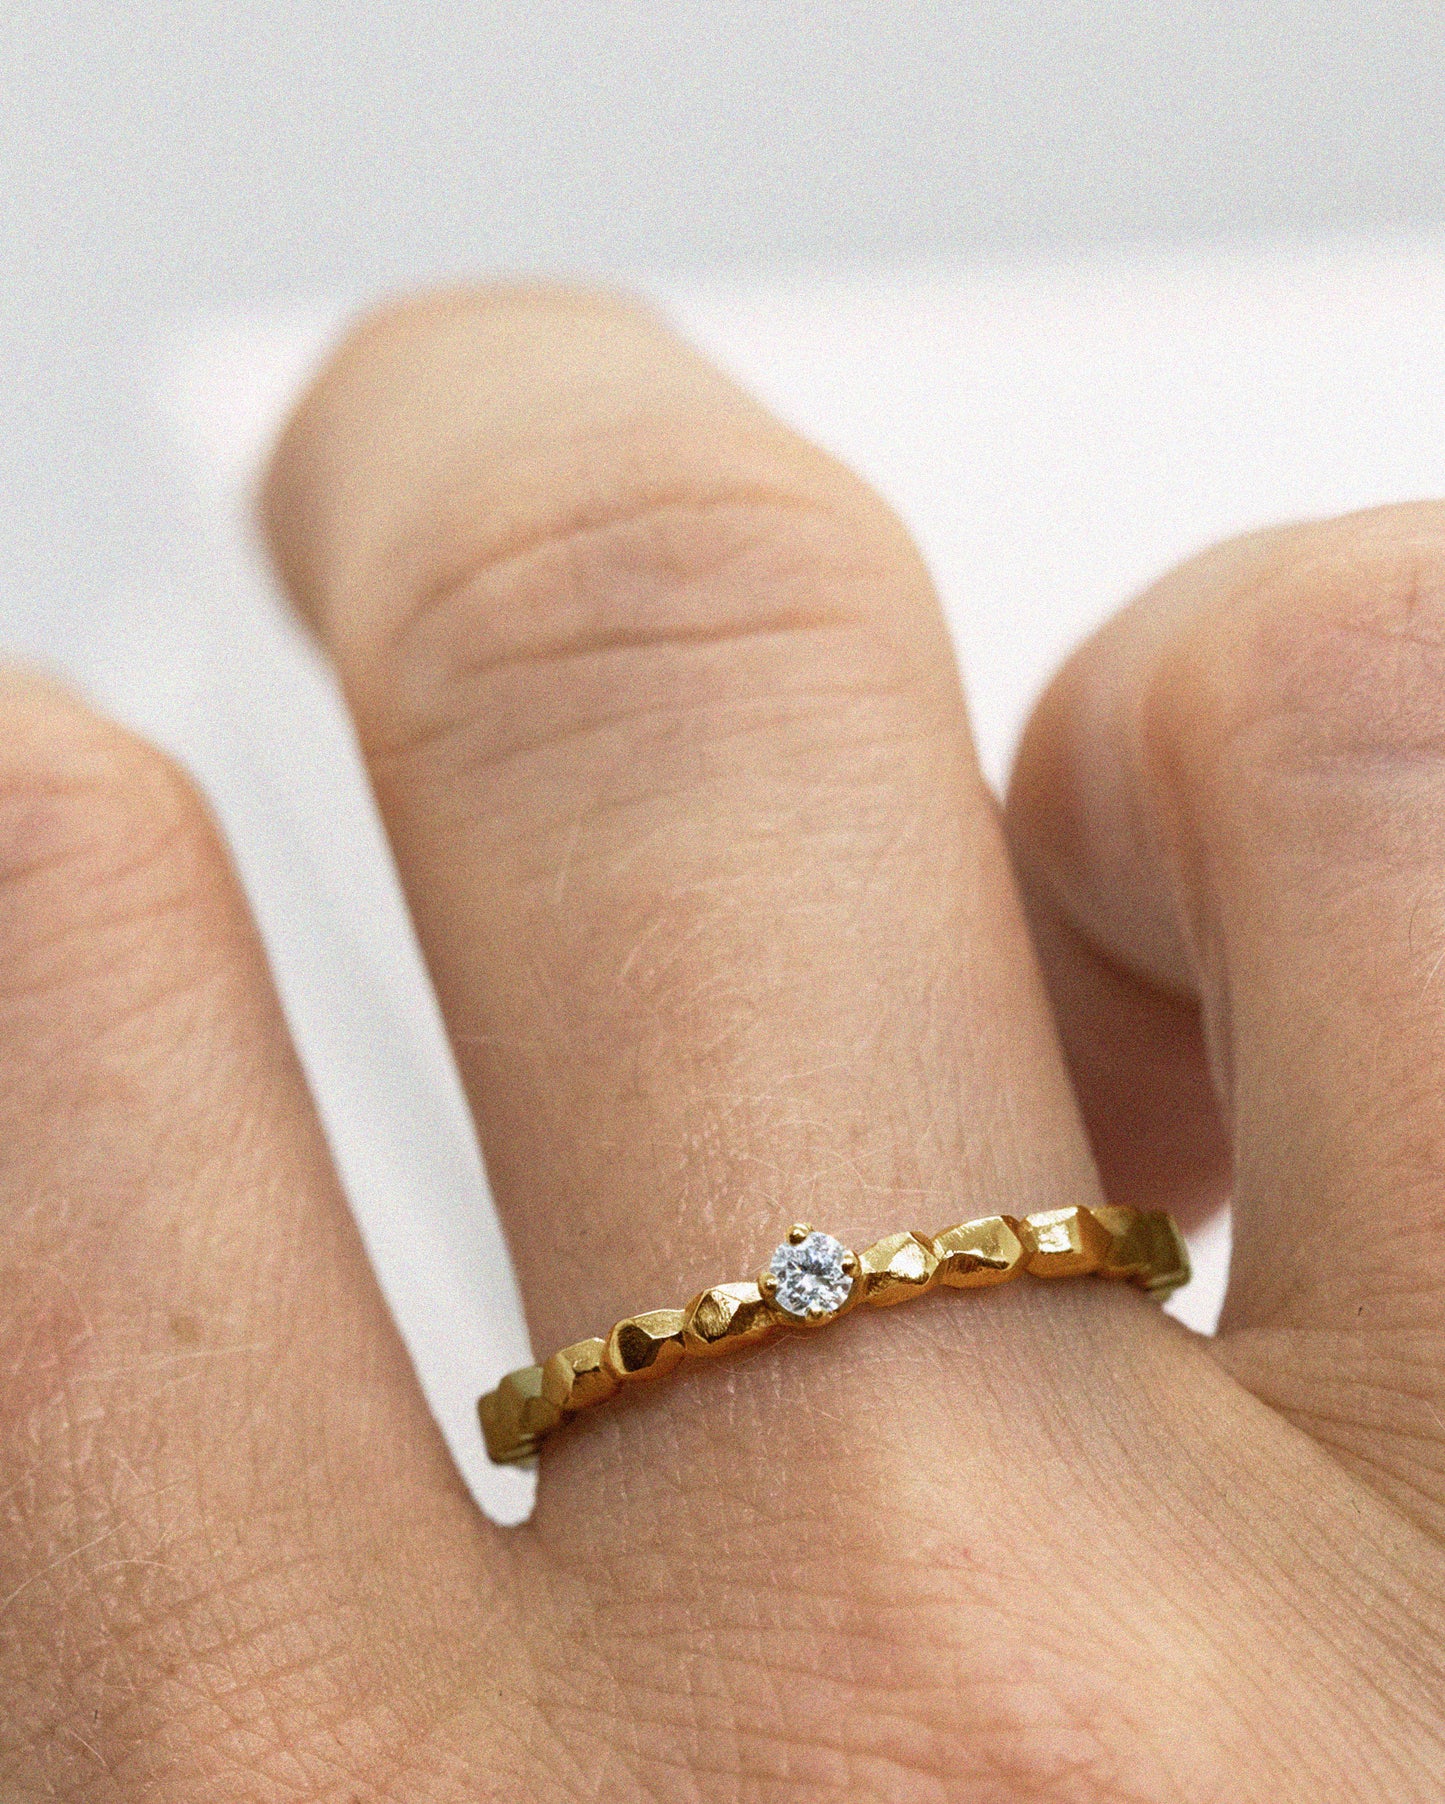 18k fairmined gouden Refined ring met klein wit diamantje